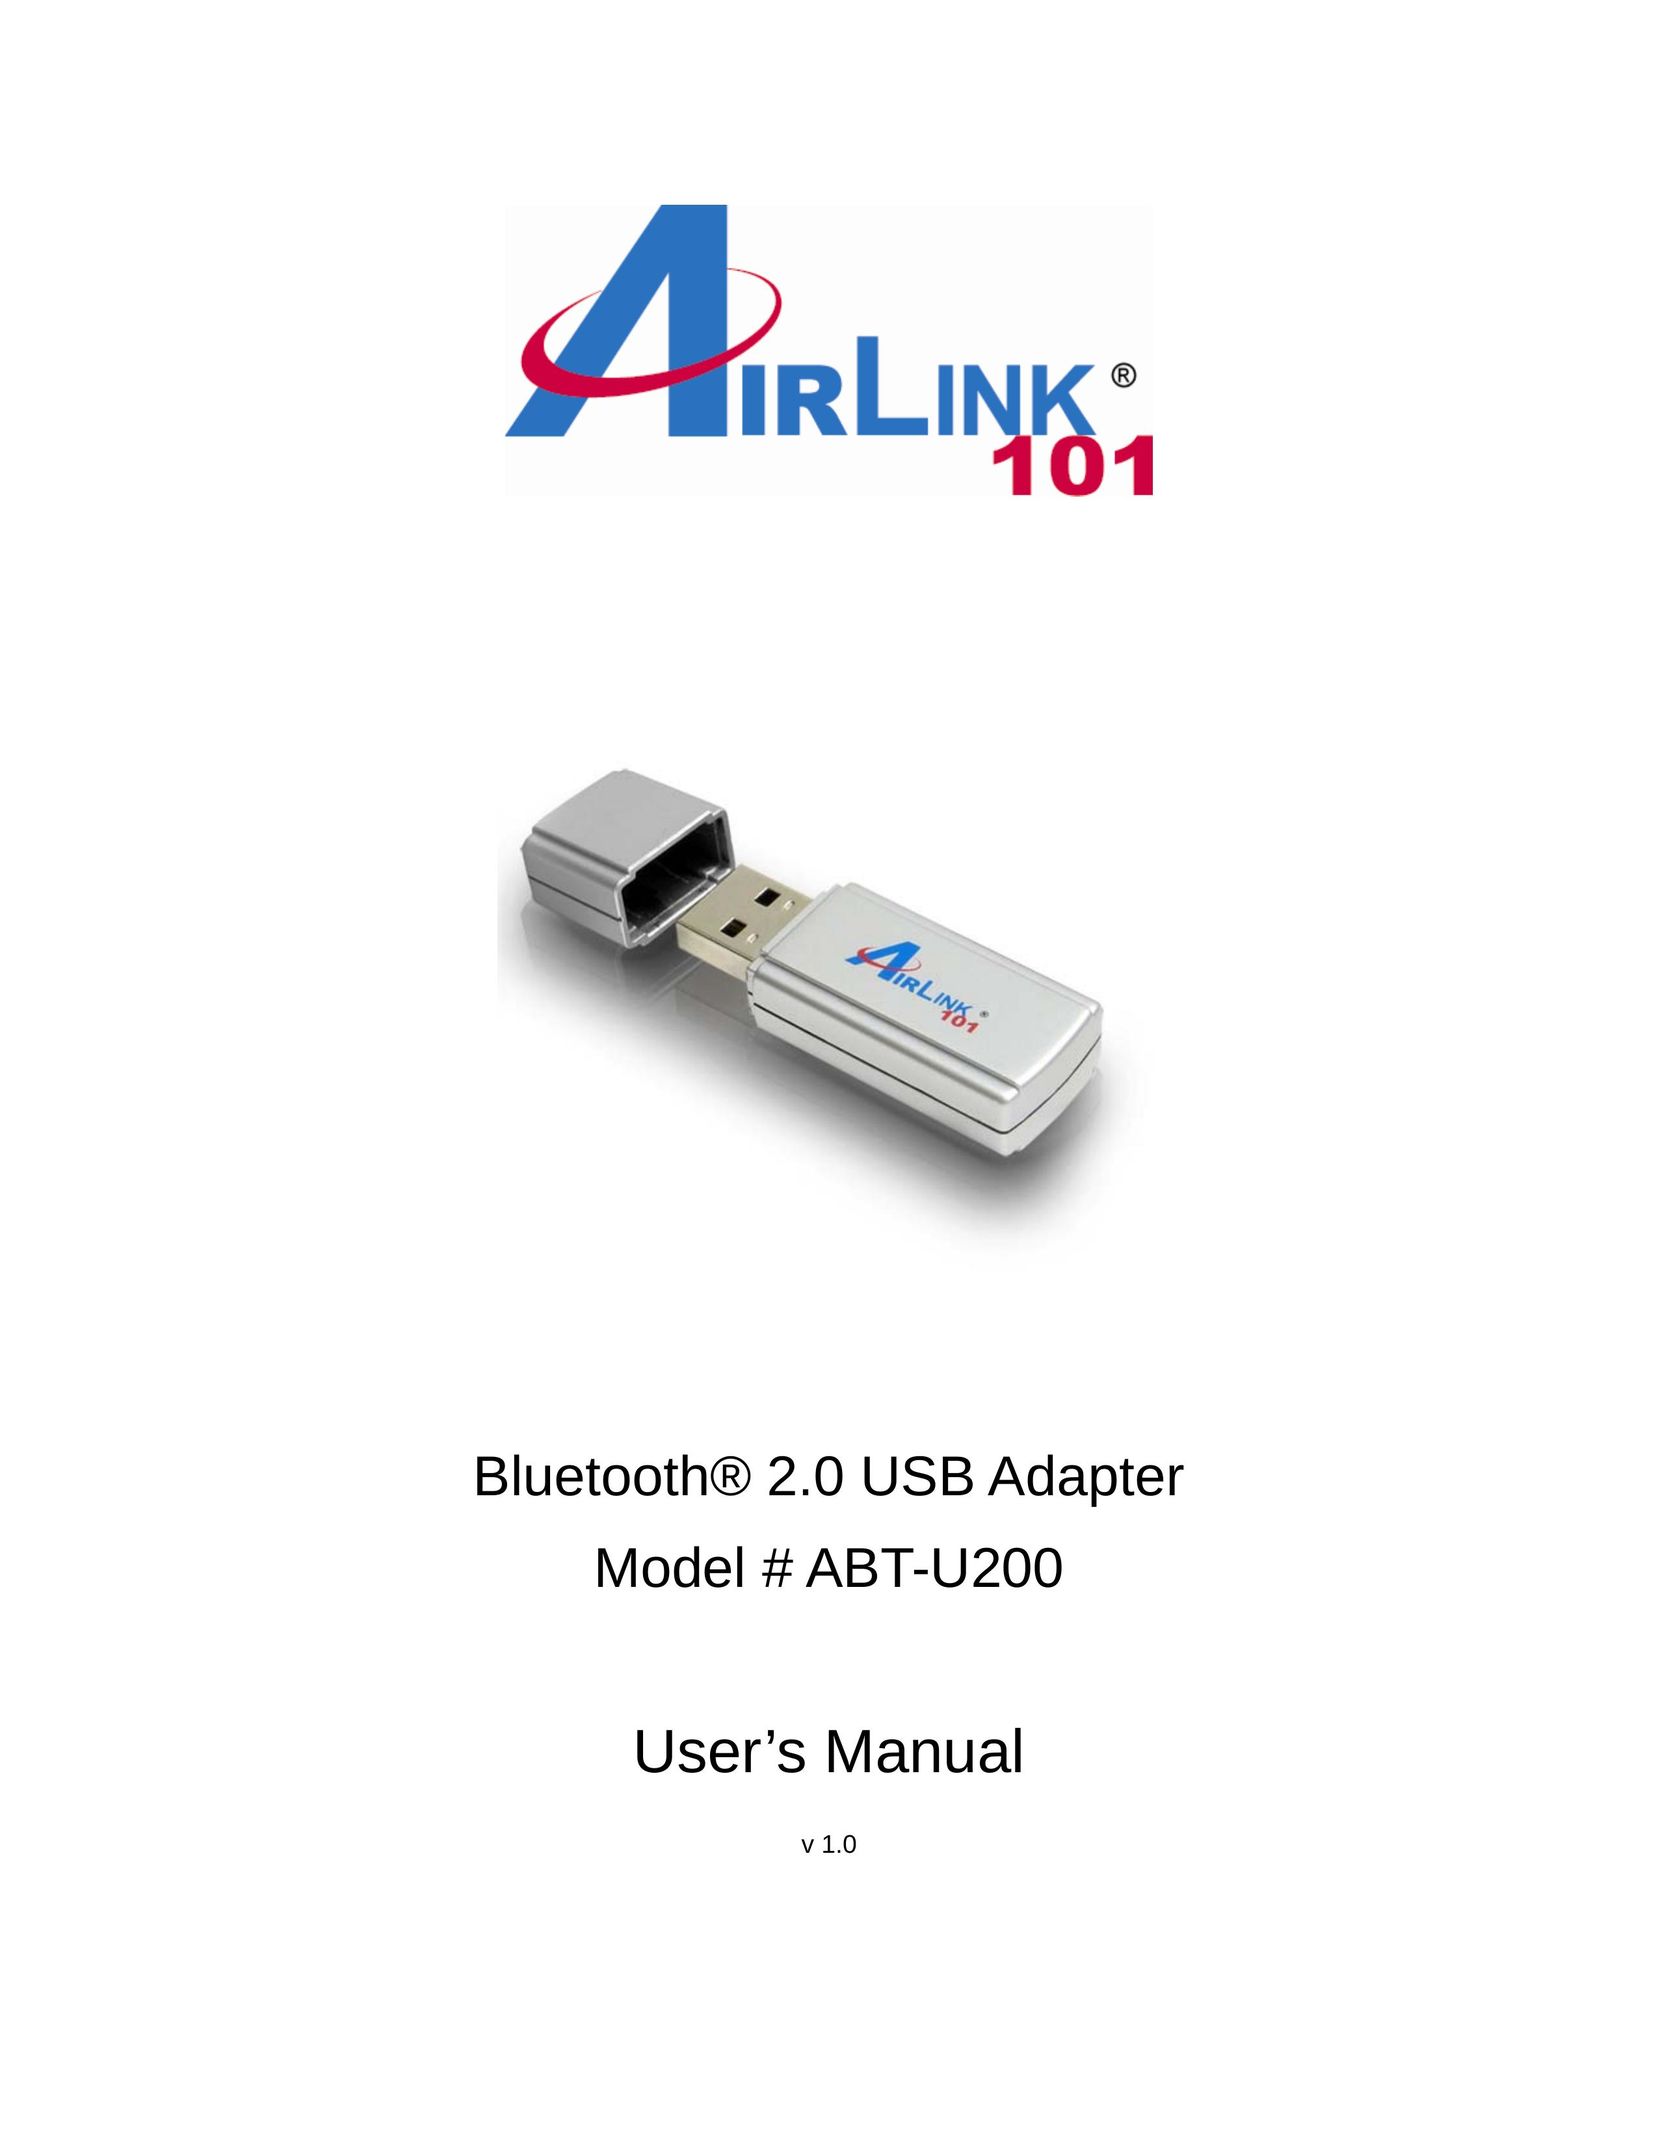 Airlink101 ABT-U200 Network Card User Manual